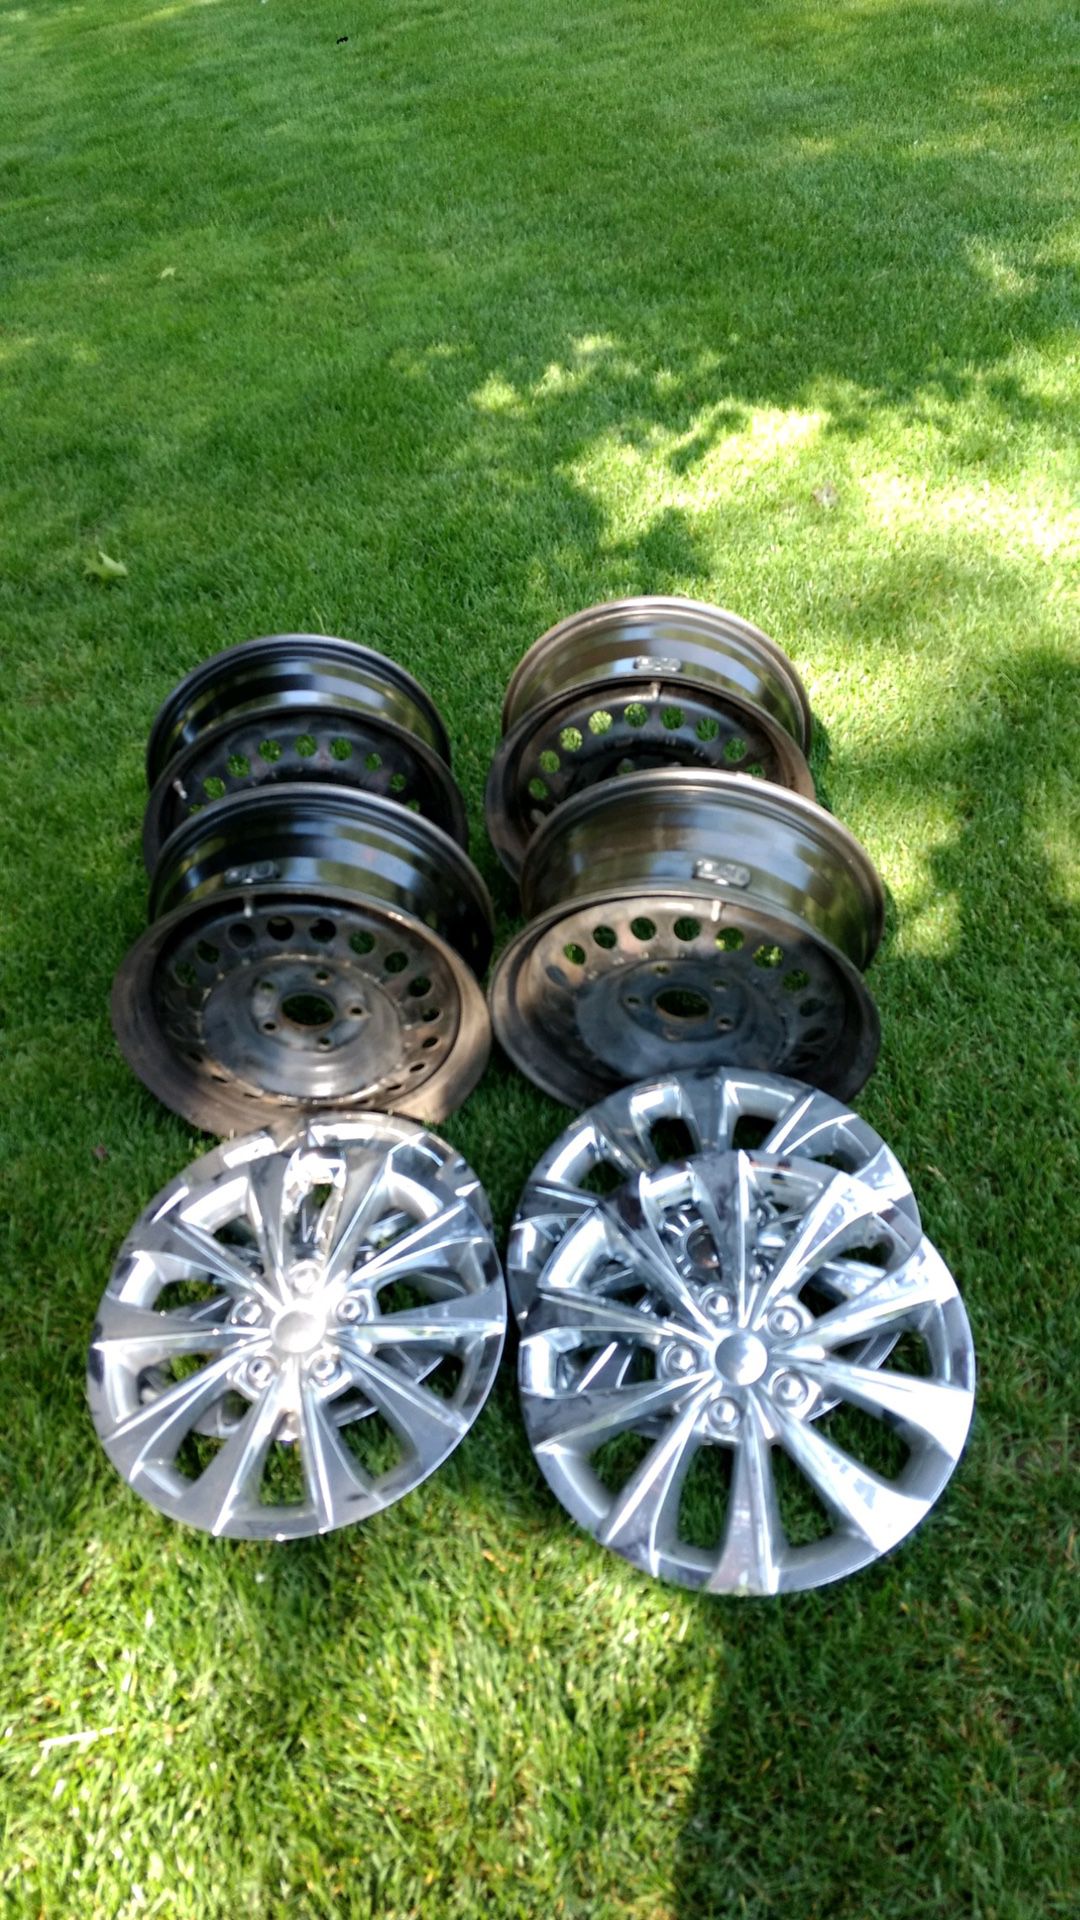 Rims & hubcaps from 2010 Honda Accord